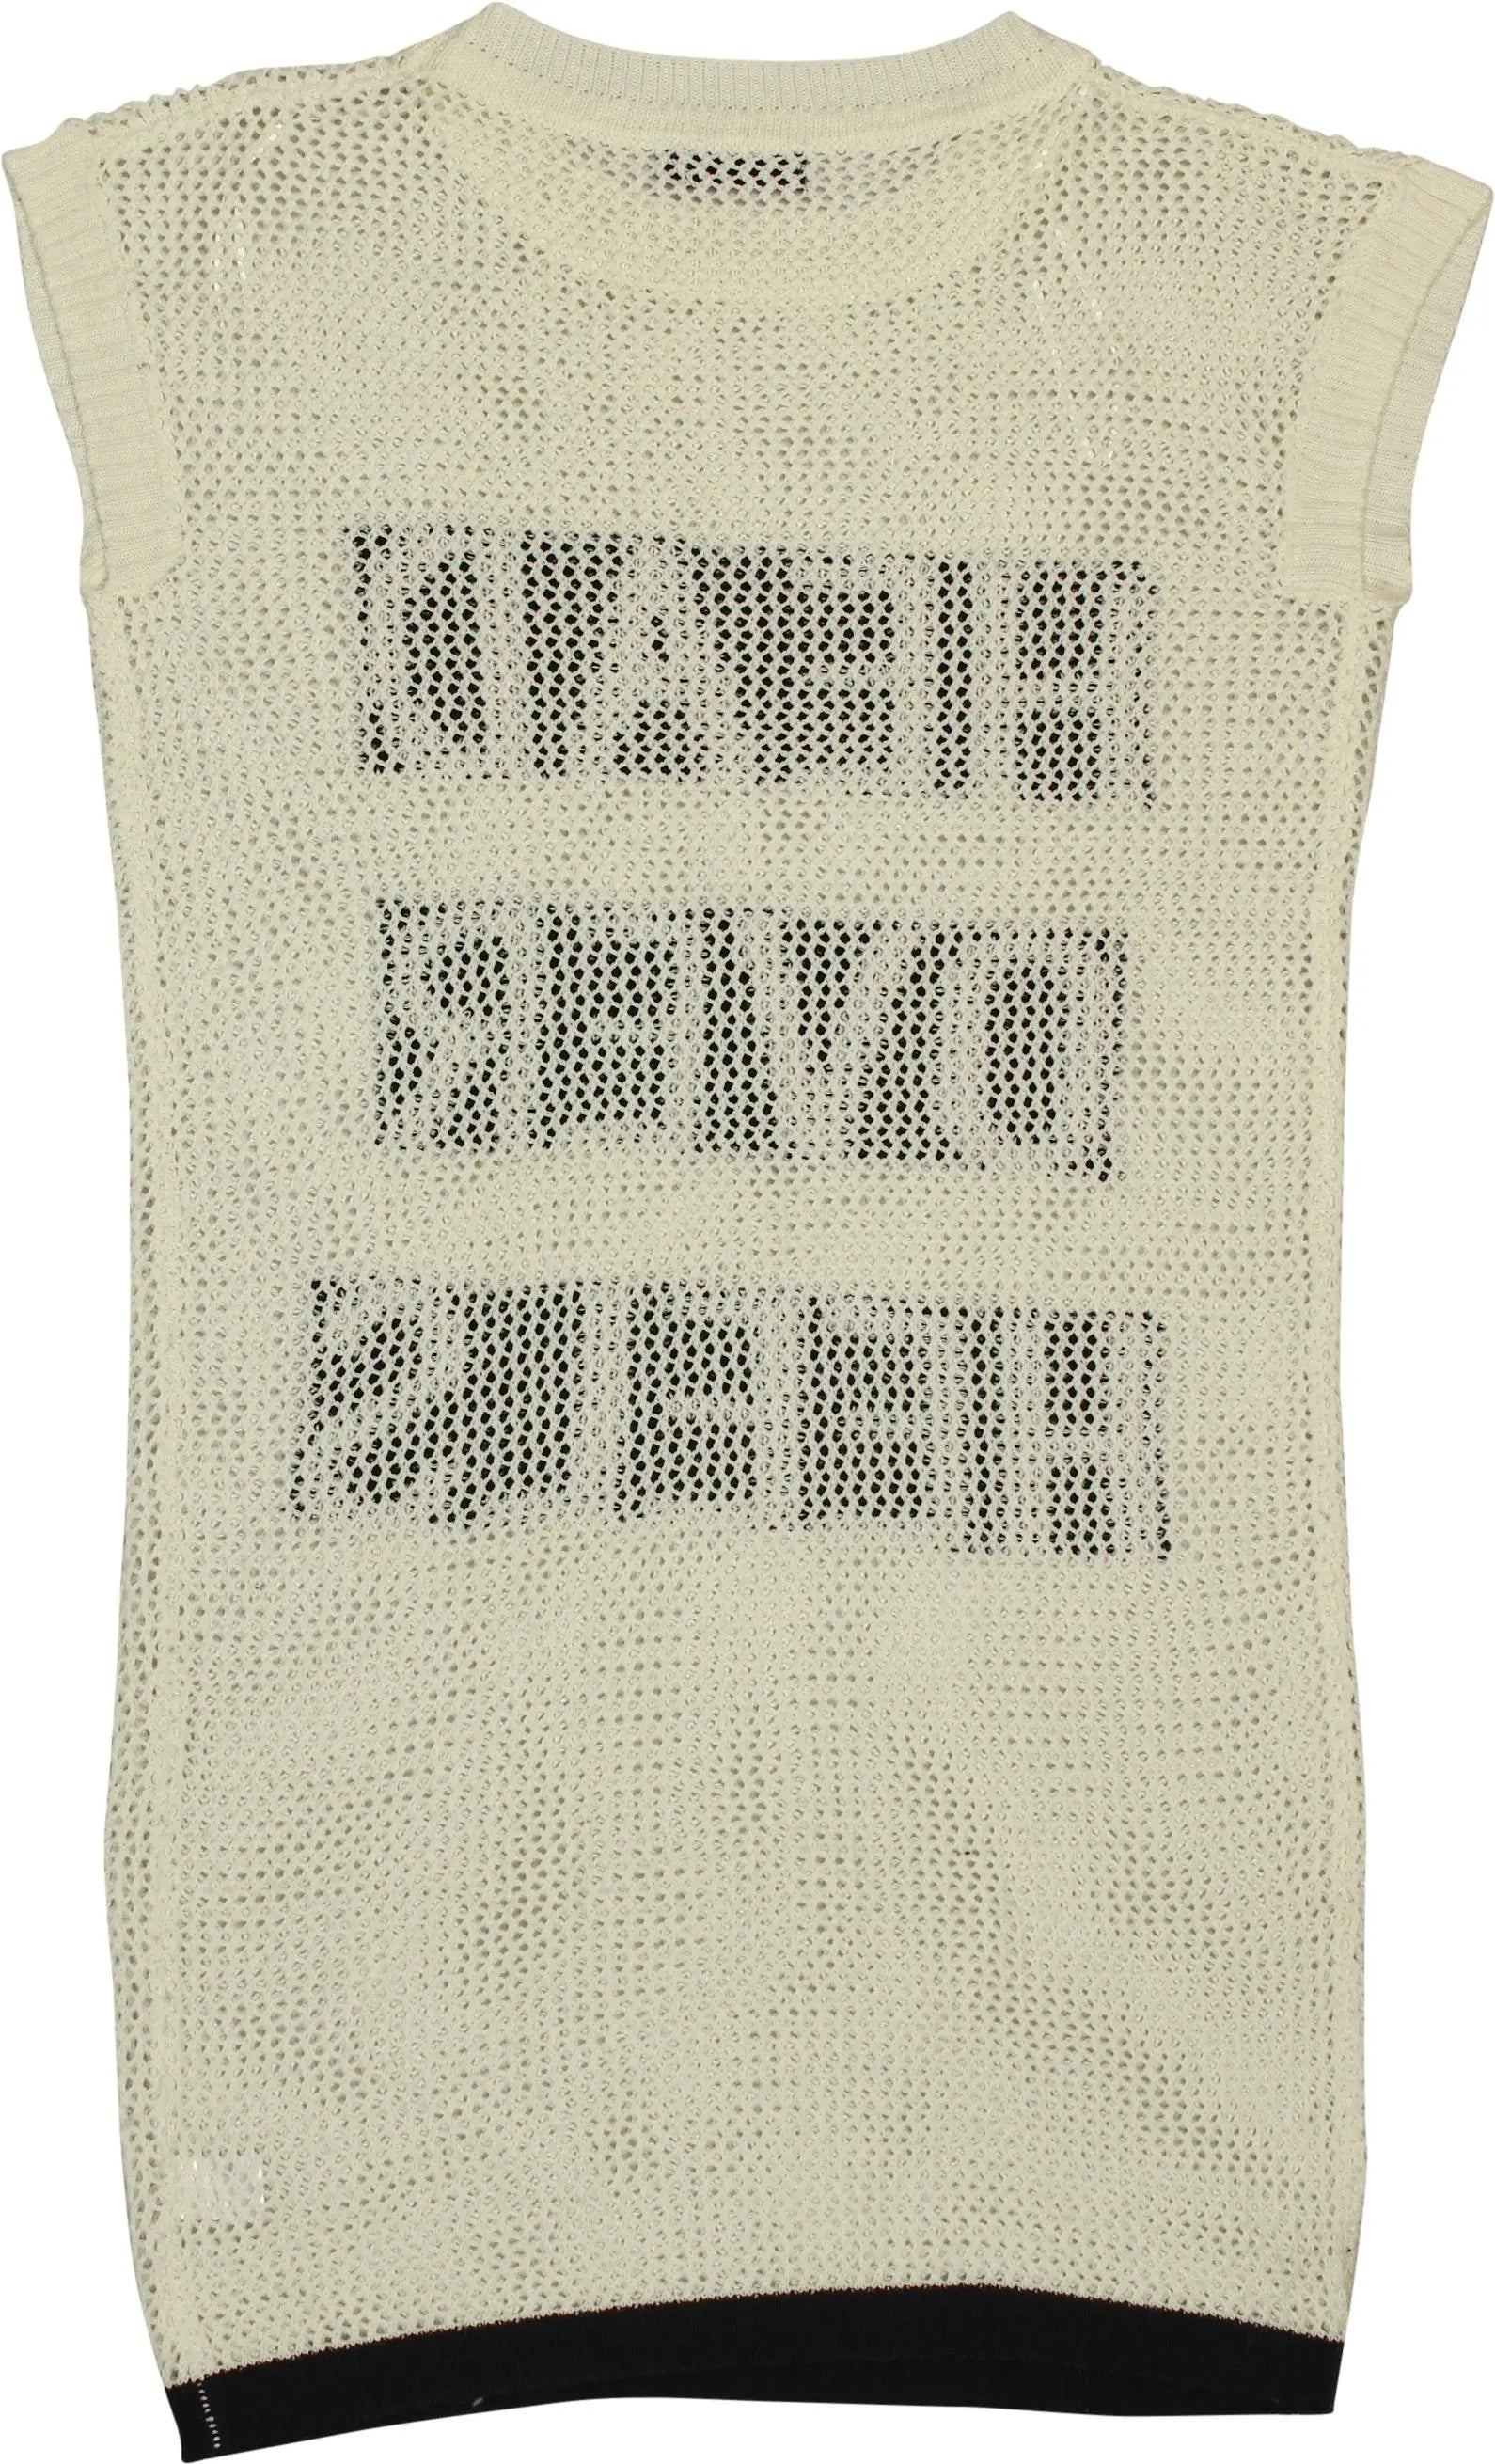 Sophyline - Knitted Jumper- ThriftTale.com - Vintage and second handclothing